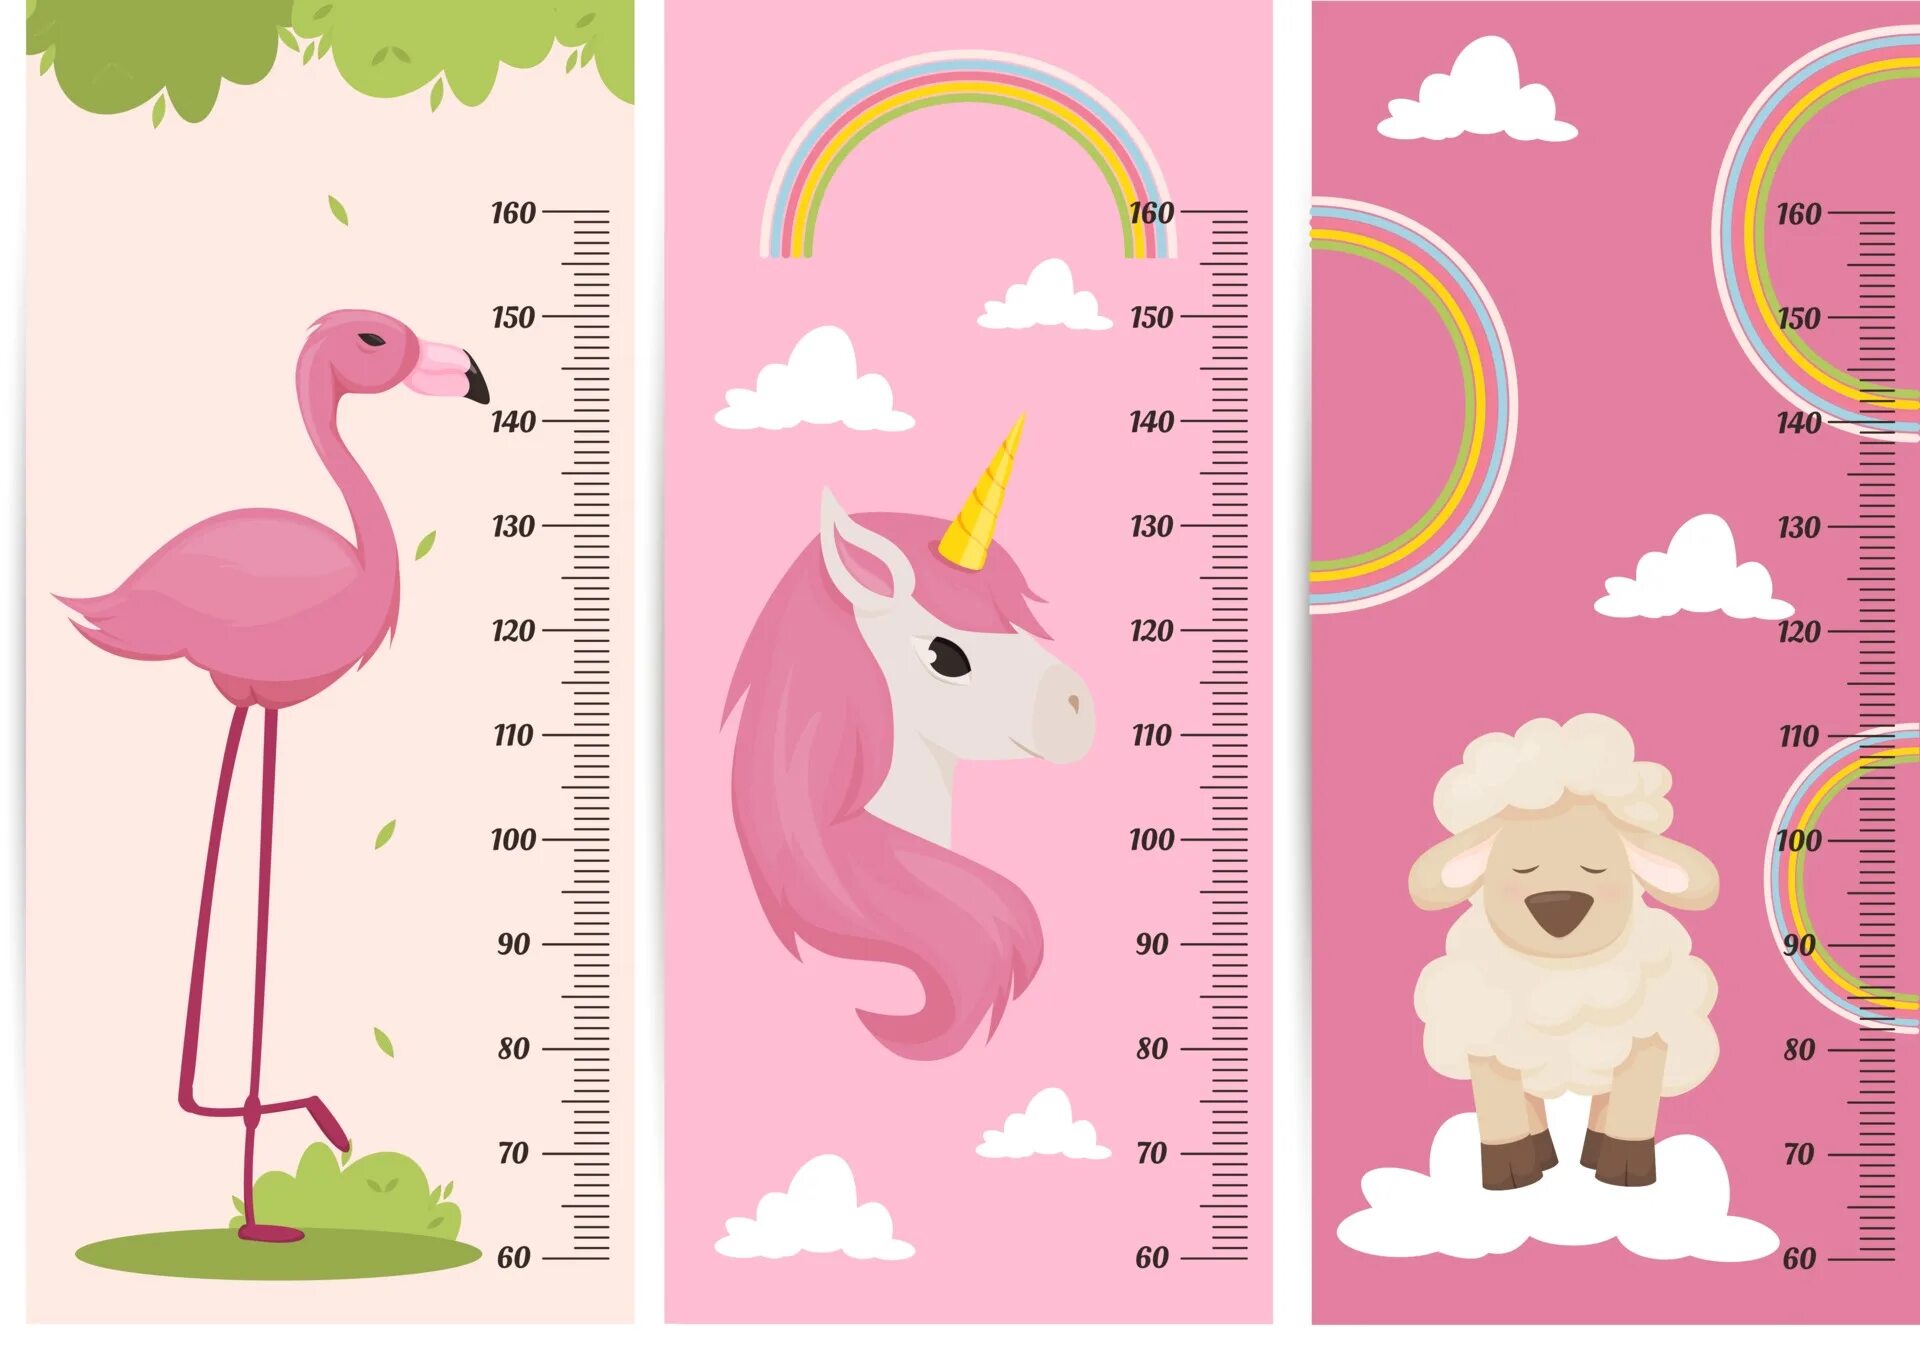 Метр детский. Height Meter Kids. Height Meter for children. Kids height Chart Design Template. Growth Ruler Kids Wallpaper.